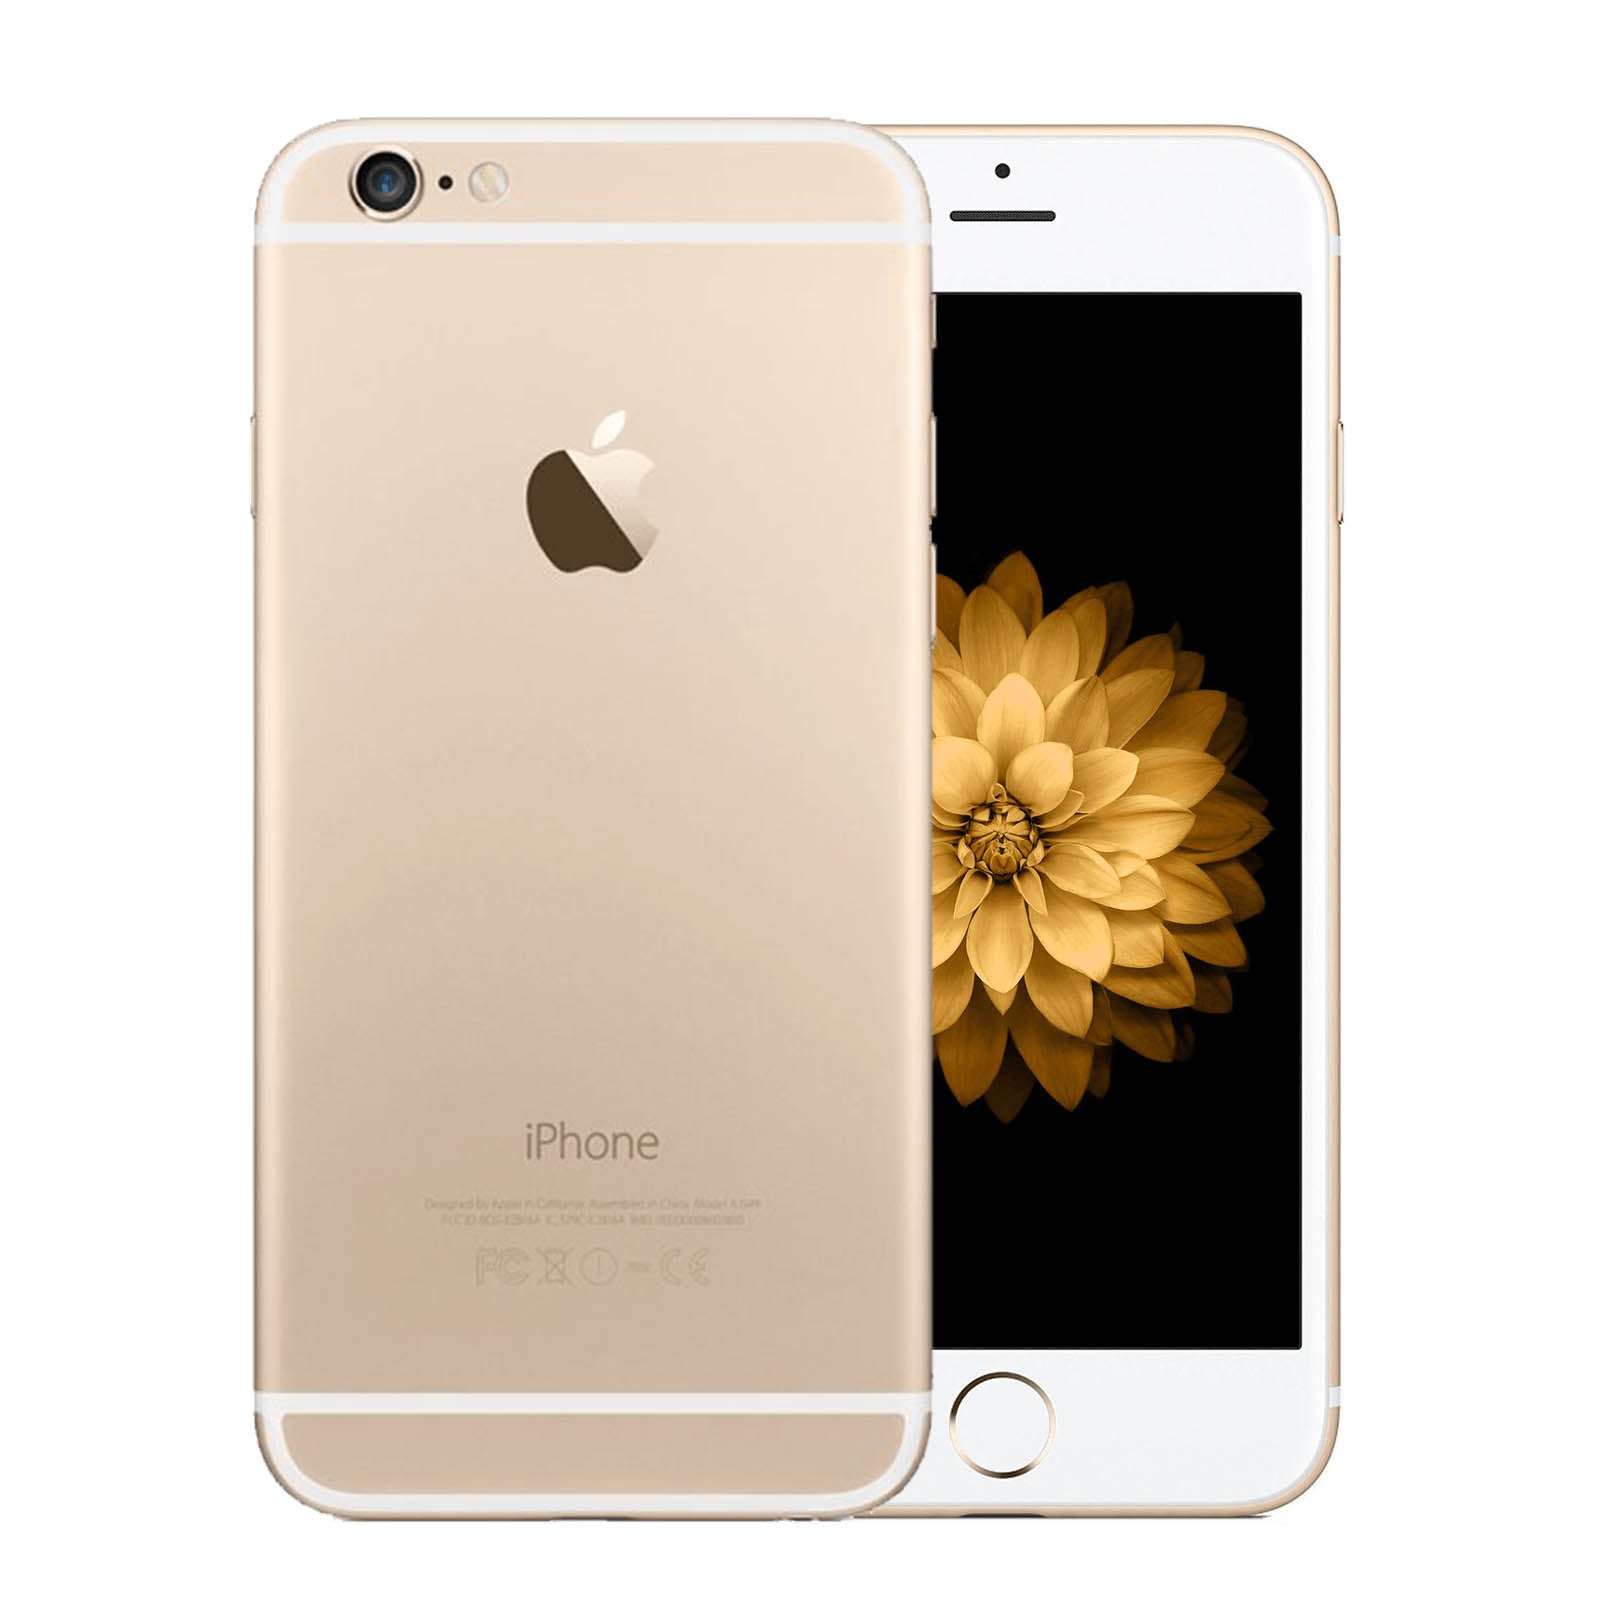 Apple iPhone 6 128GB Gold Very Good - Unlocked